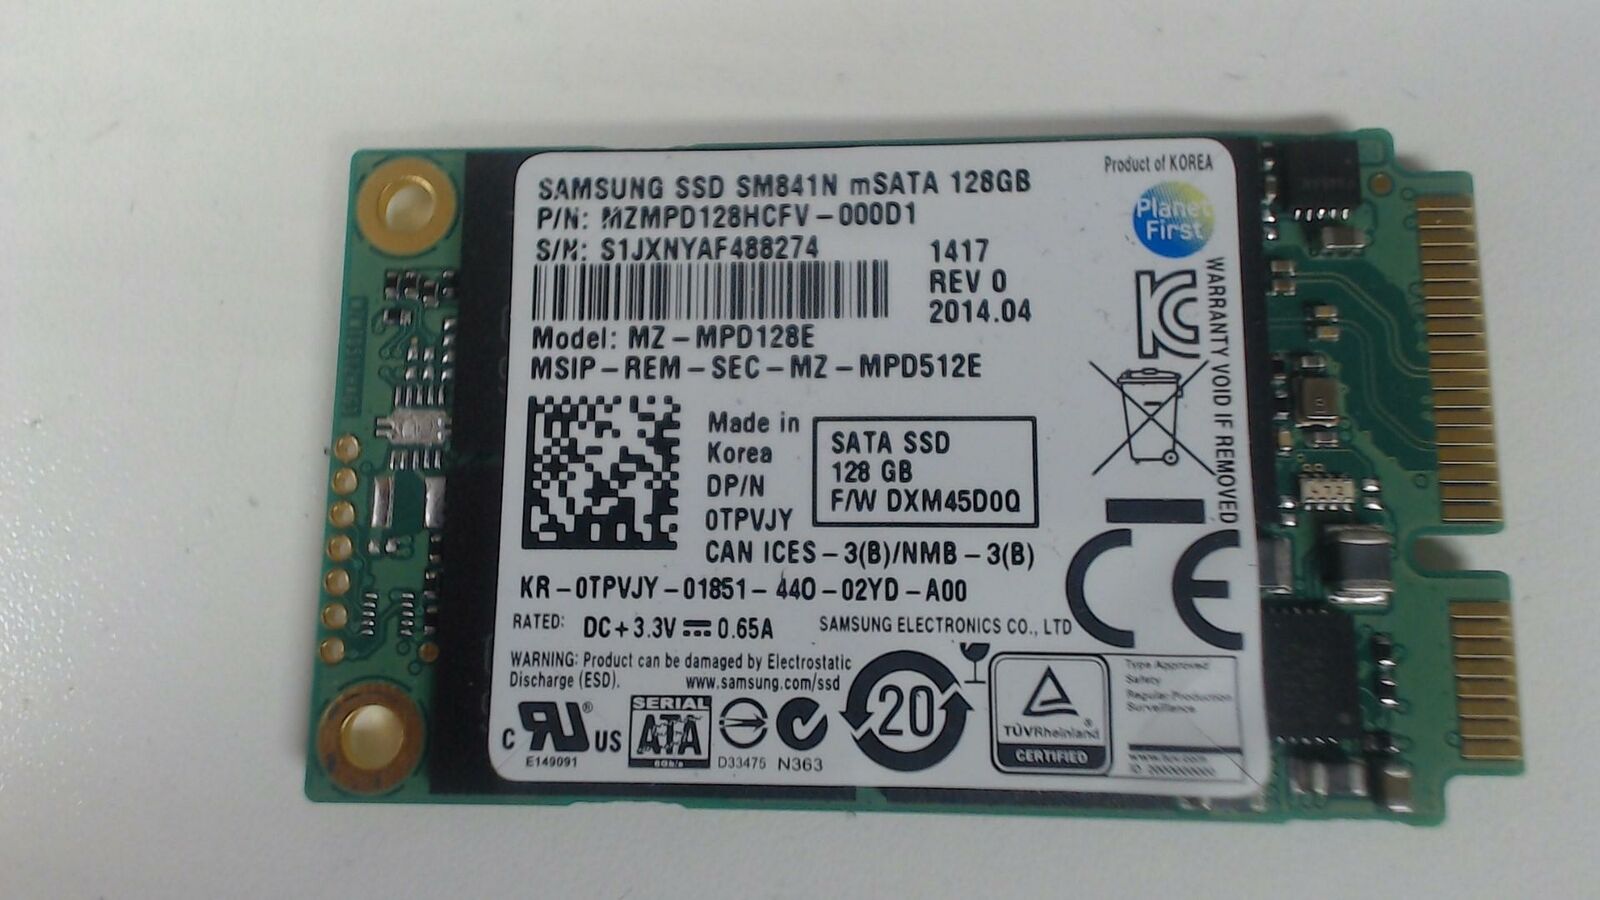 Samsung SSD SM841N mSATA 128GB Solid State Drive MZ-MPD128E P/N TPVJY